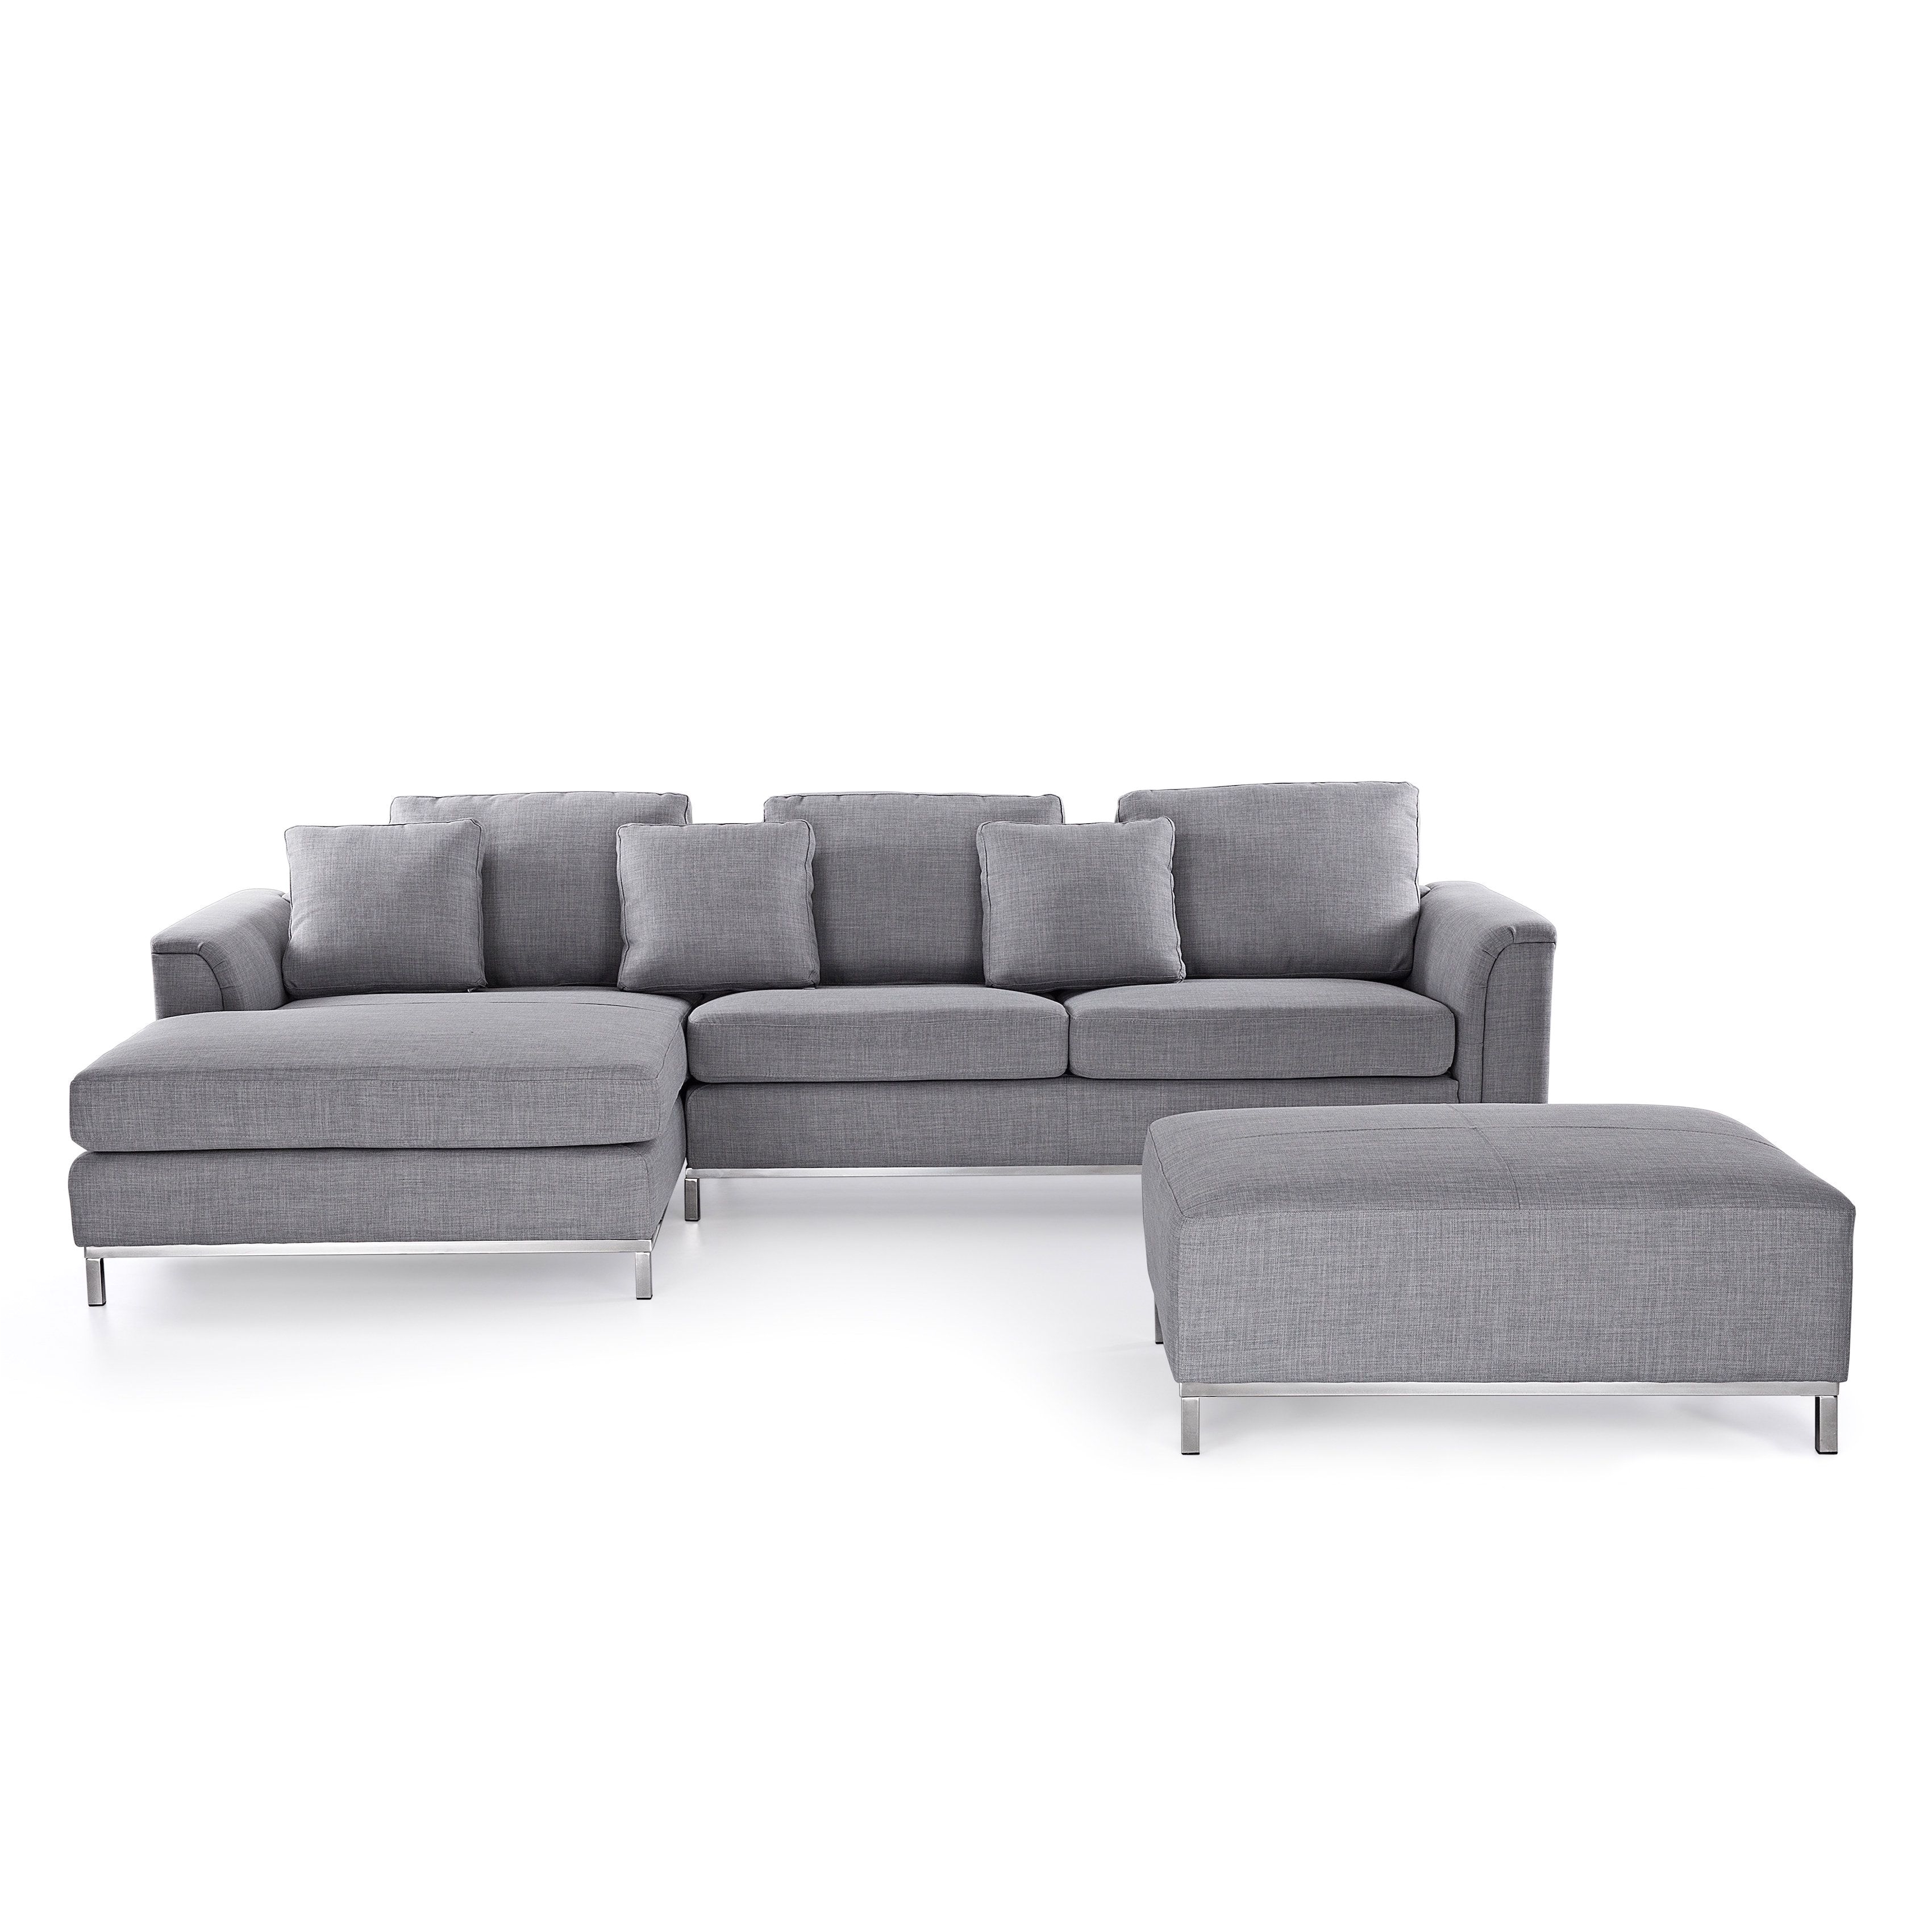 Beliani Oslo Modern Sectional Sofa with Ottoman Oslo Light Grey Polyester